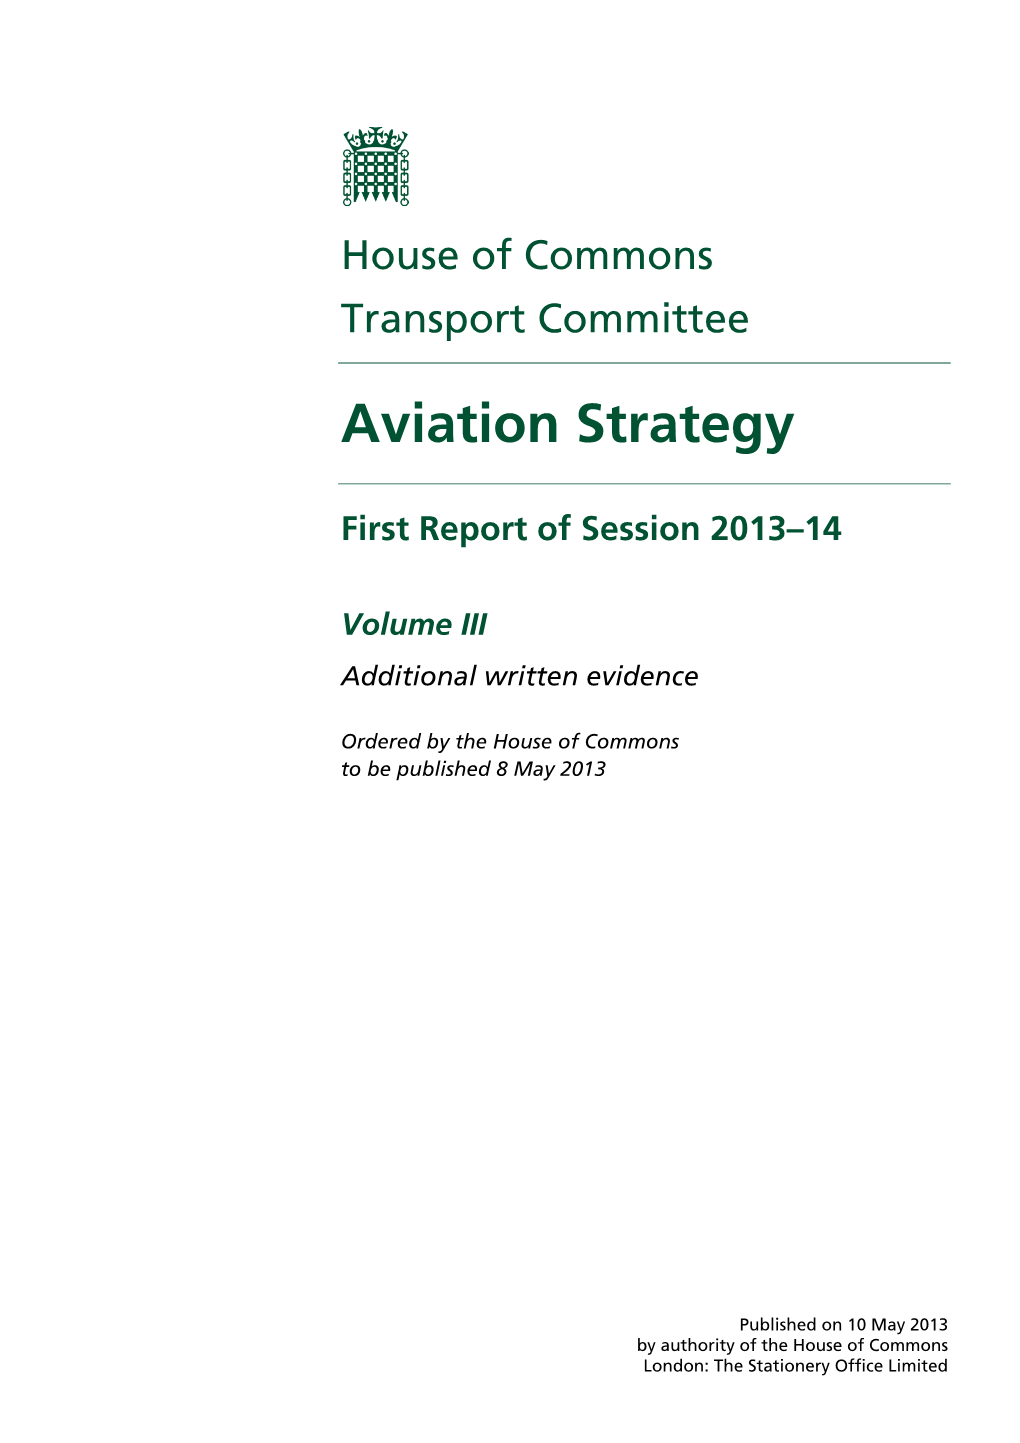 Aviation Strategy